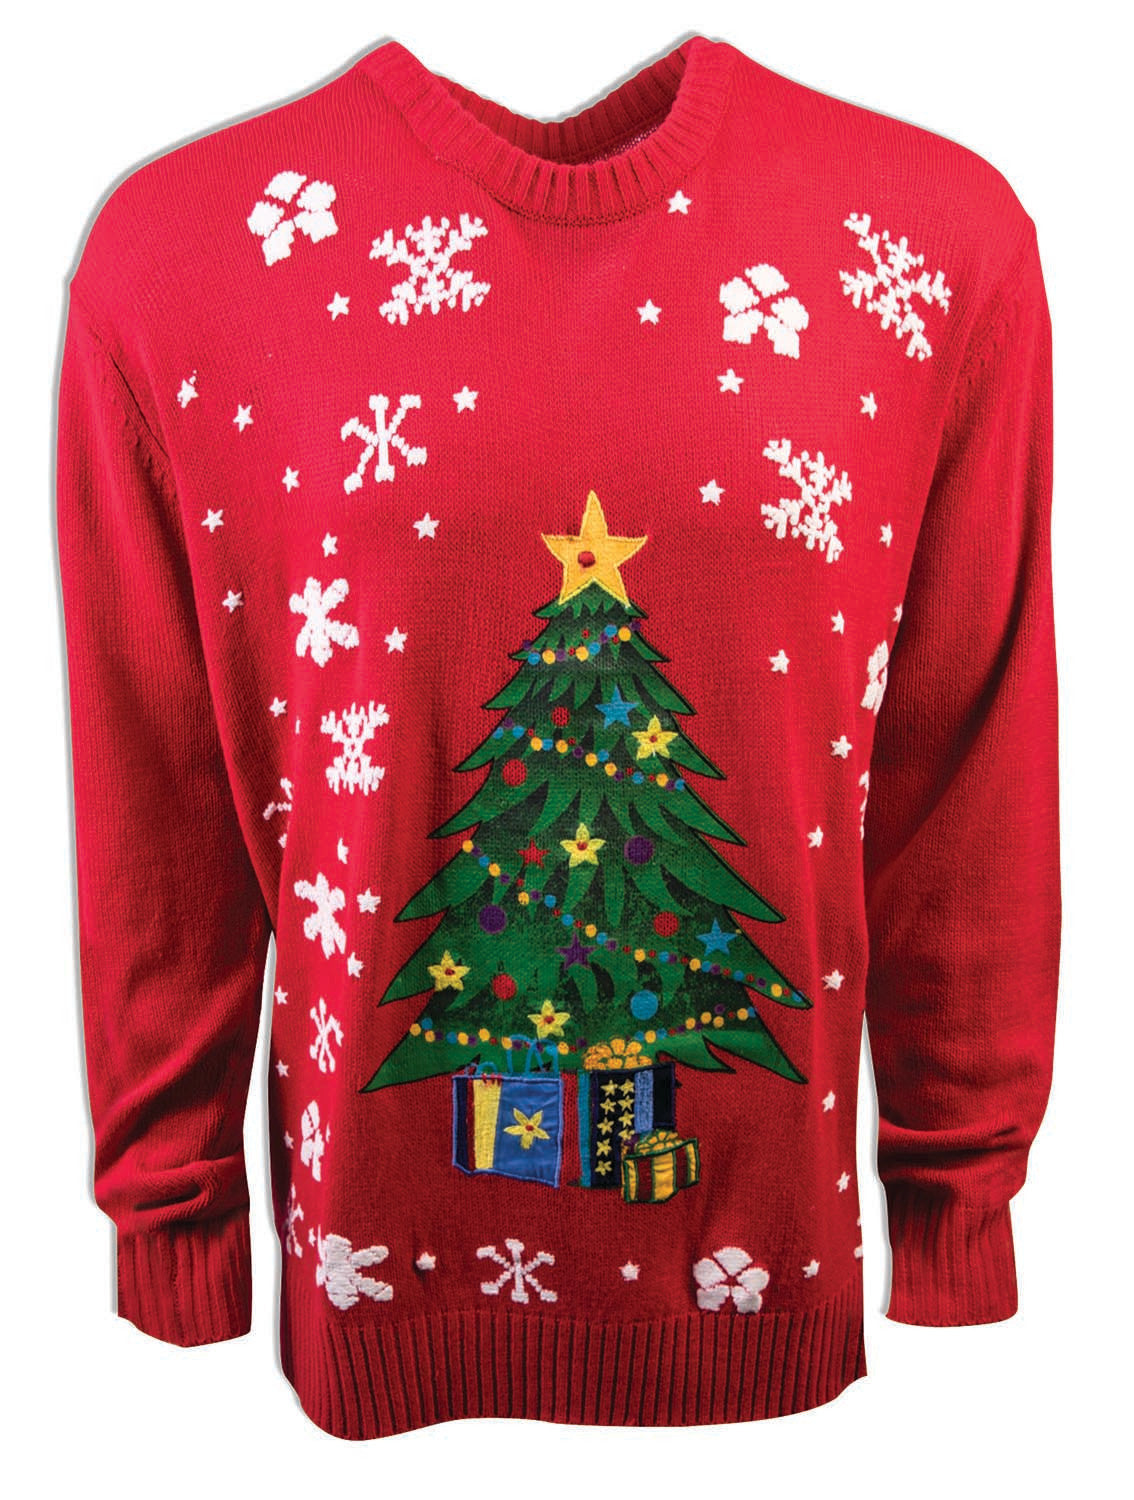 Sweater: Classic Christmas